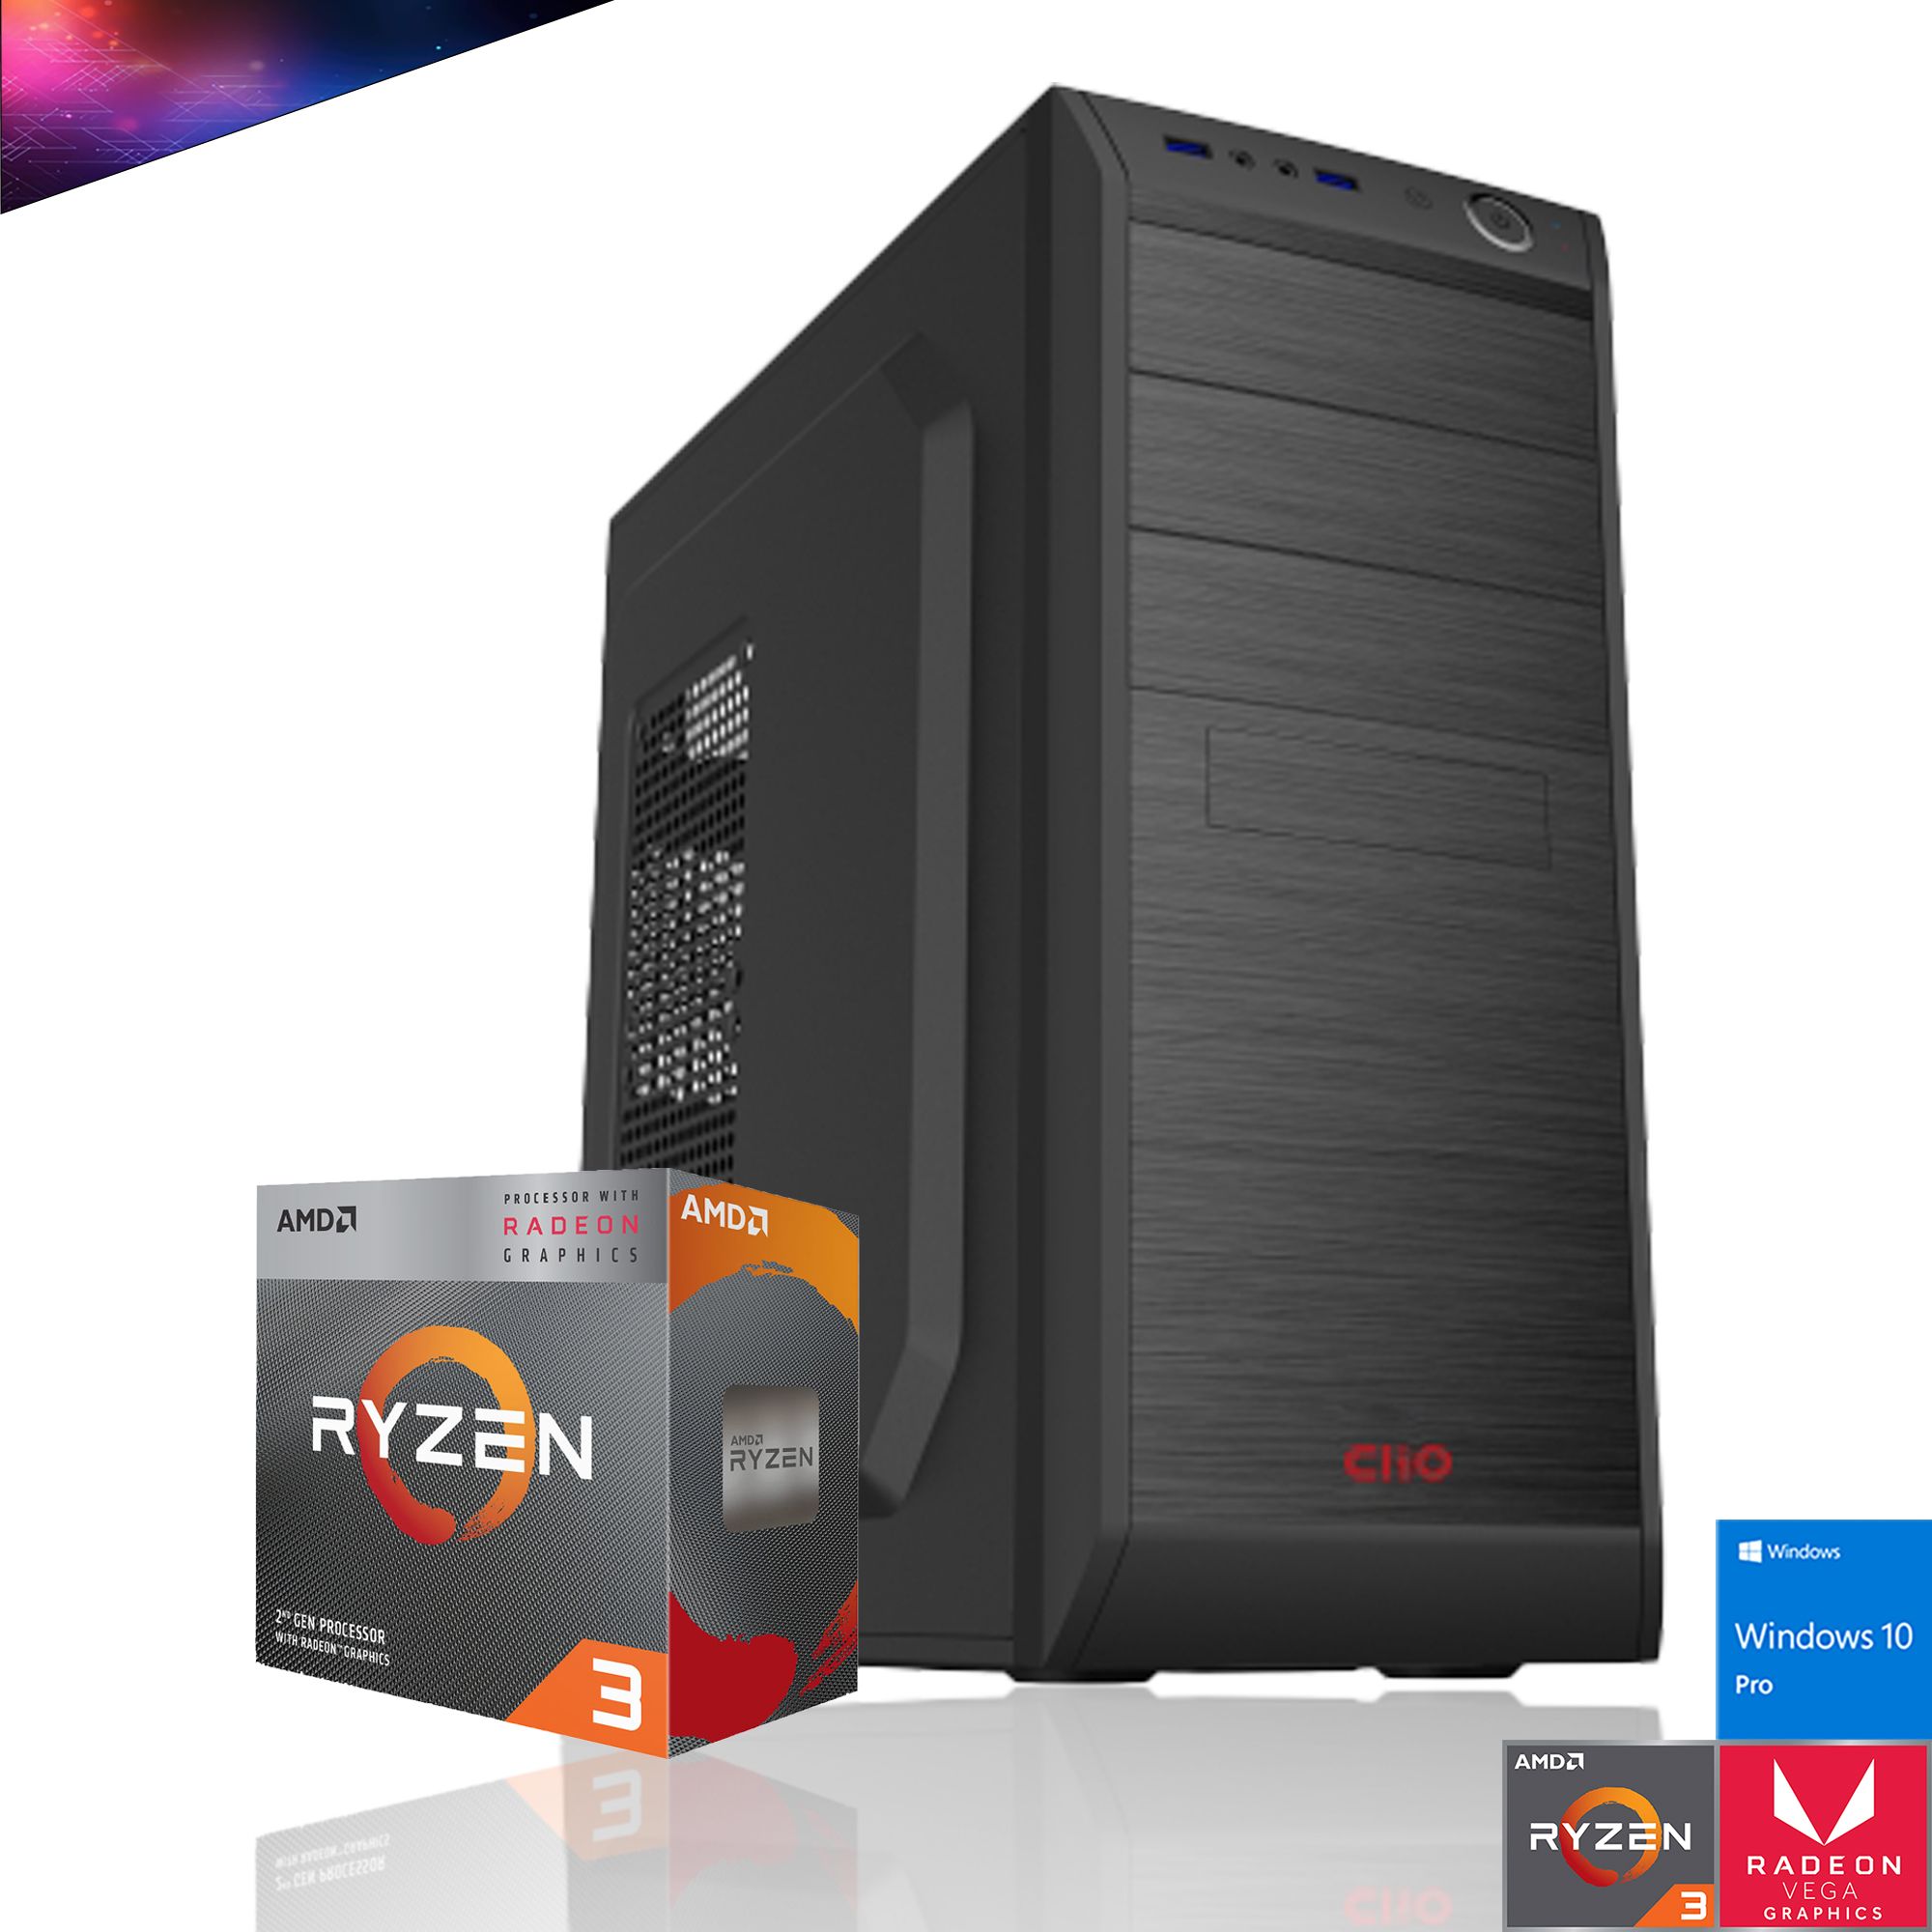 PC oficina: AMD RYZEN 3 3200g Vega 8 A520 8gb 240Gb WiFi